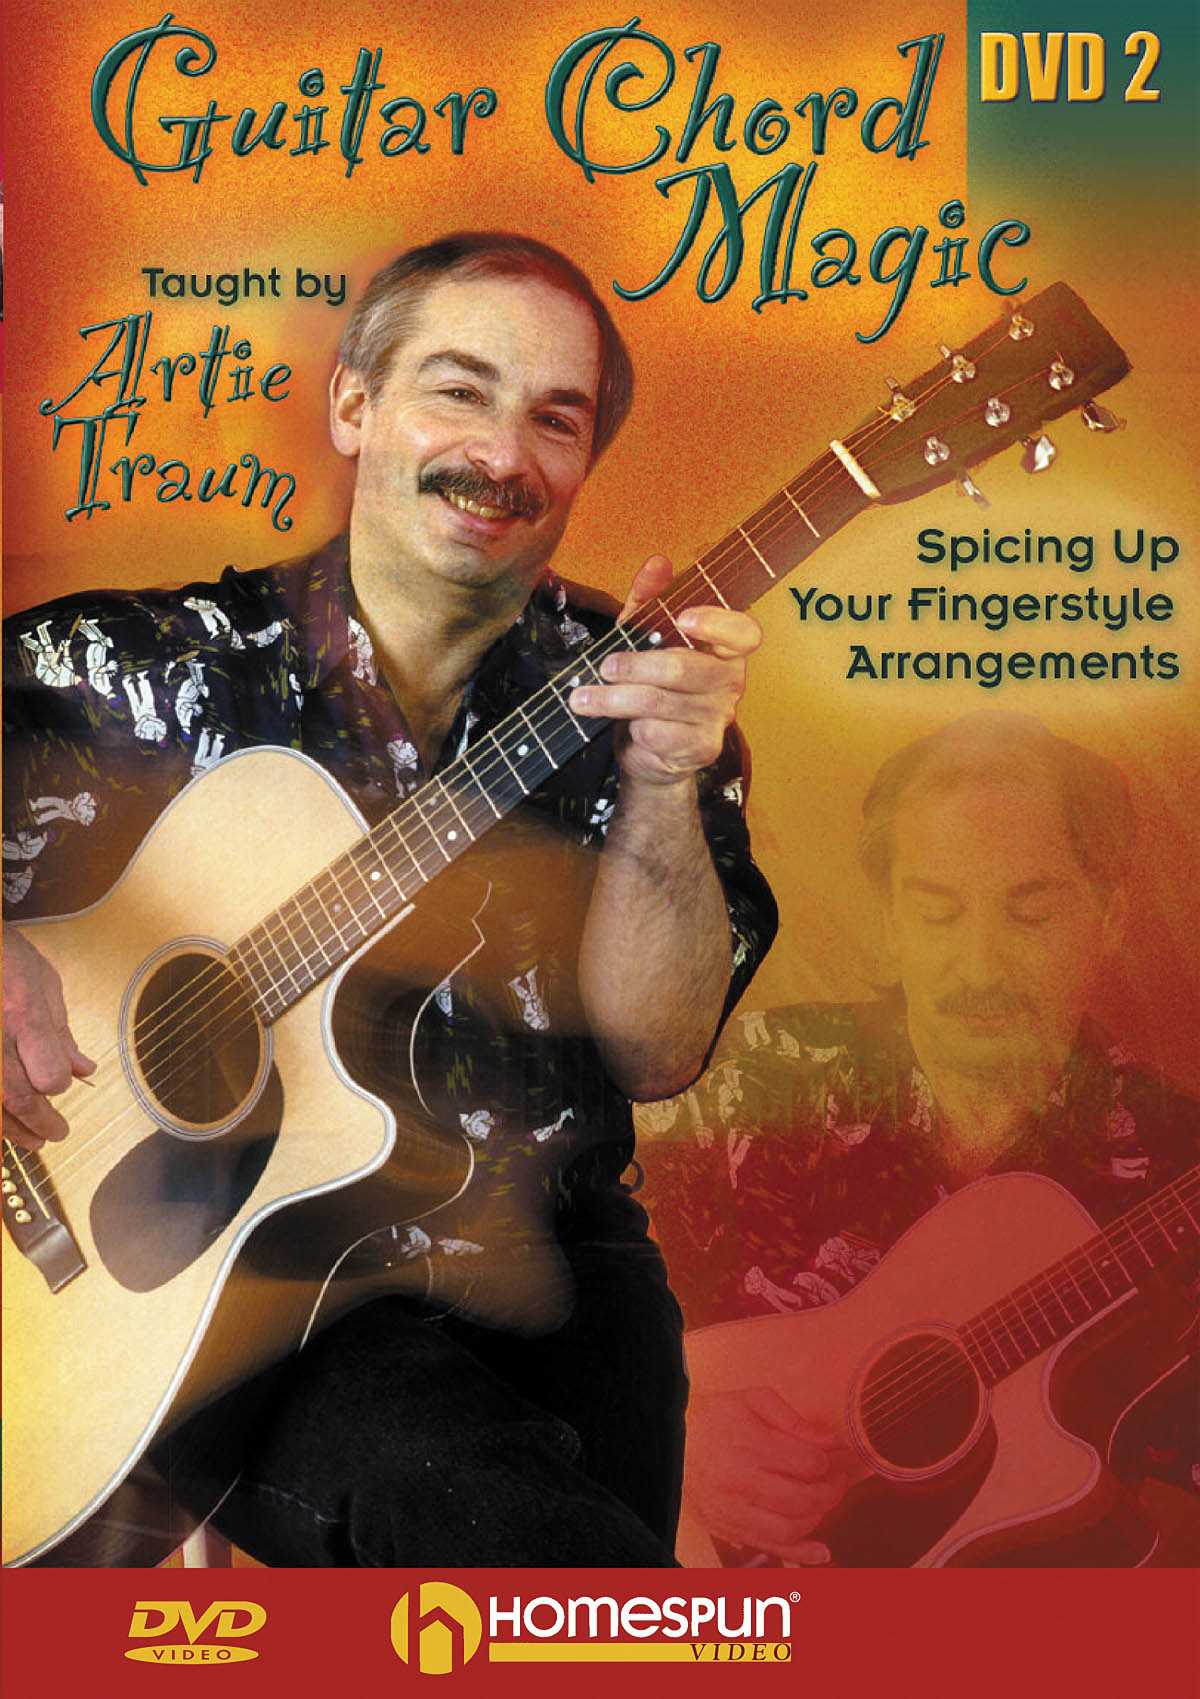 Image 1 of DVD - Guitar Chord Magic: Vol. 2 - Spicing Up Your Fingerstyle Arrangements - SKU# 300-DVD231 : Product Type Media : Elderly Instruments